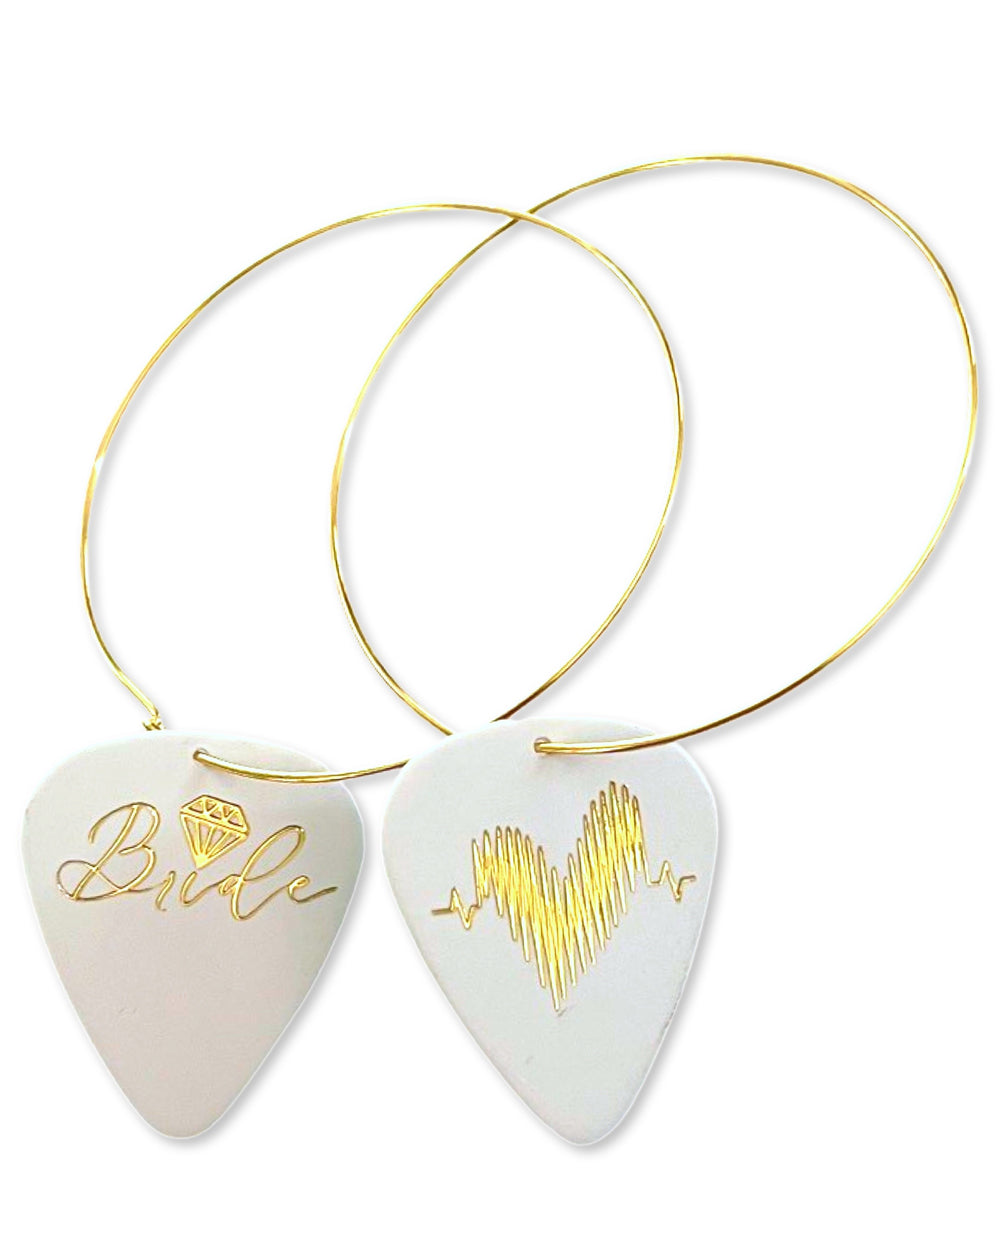 WS Bride White Gold Reversible Single Guitar Pick Earrings